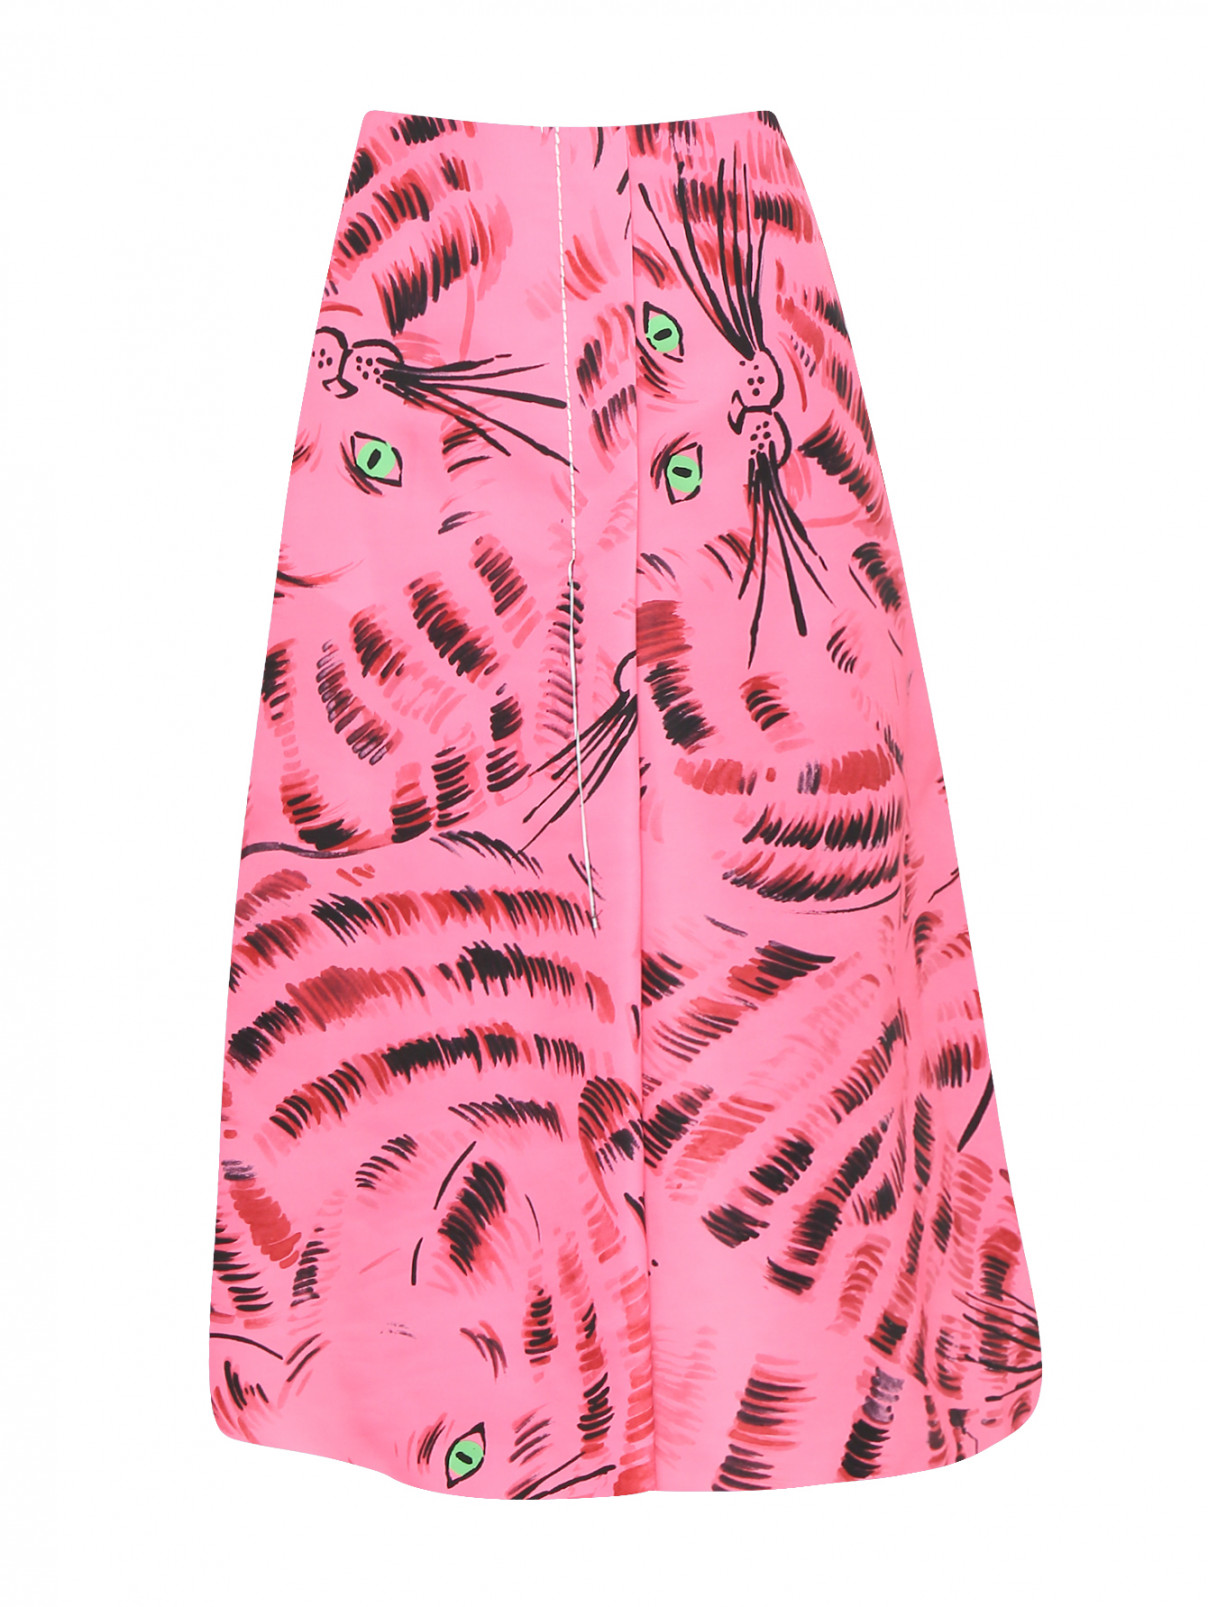 Юбка-миди с узором Marni  –  Общий вид  – Цвет:  Розовый